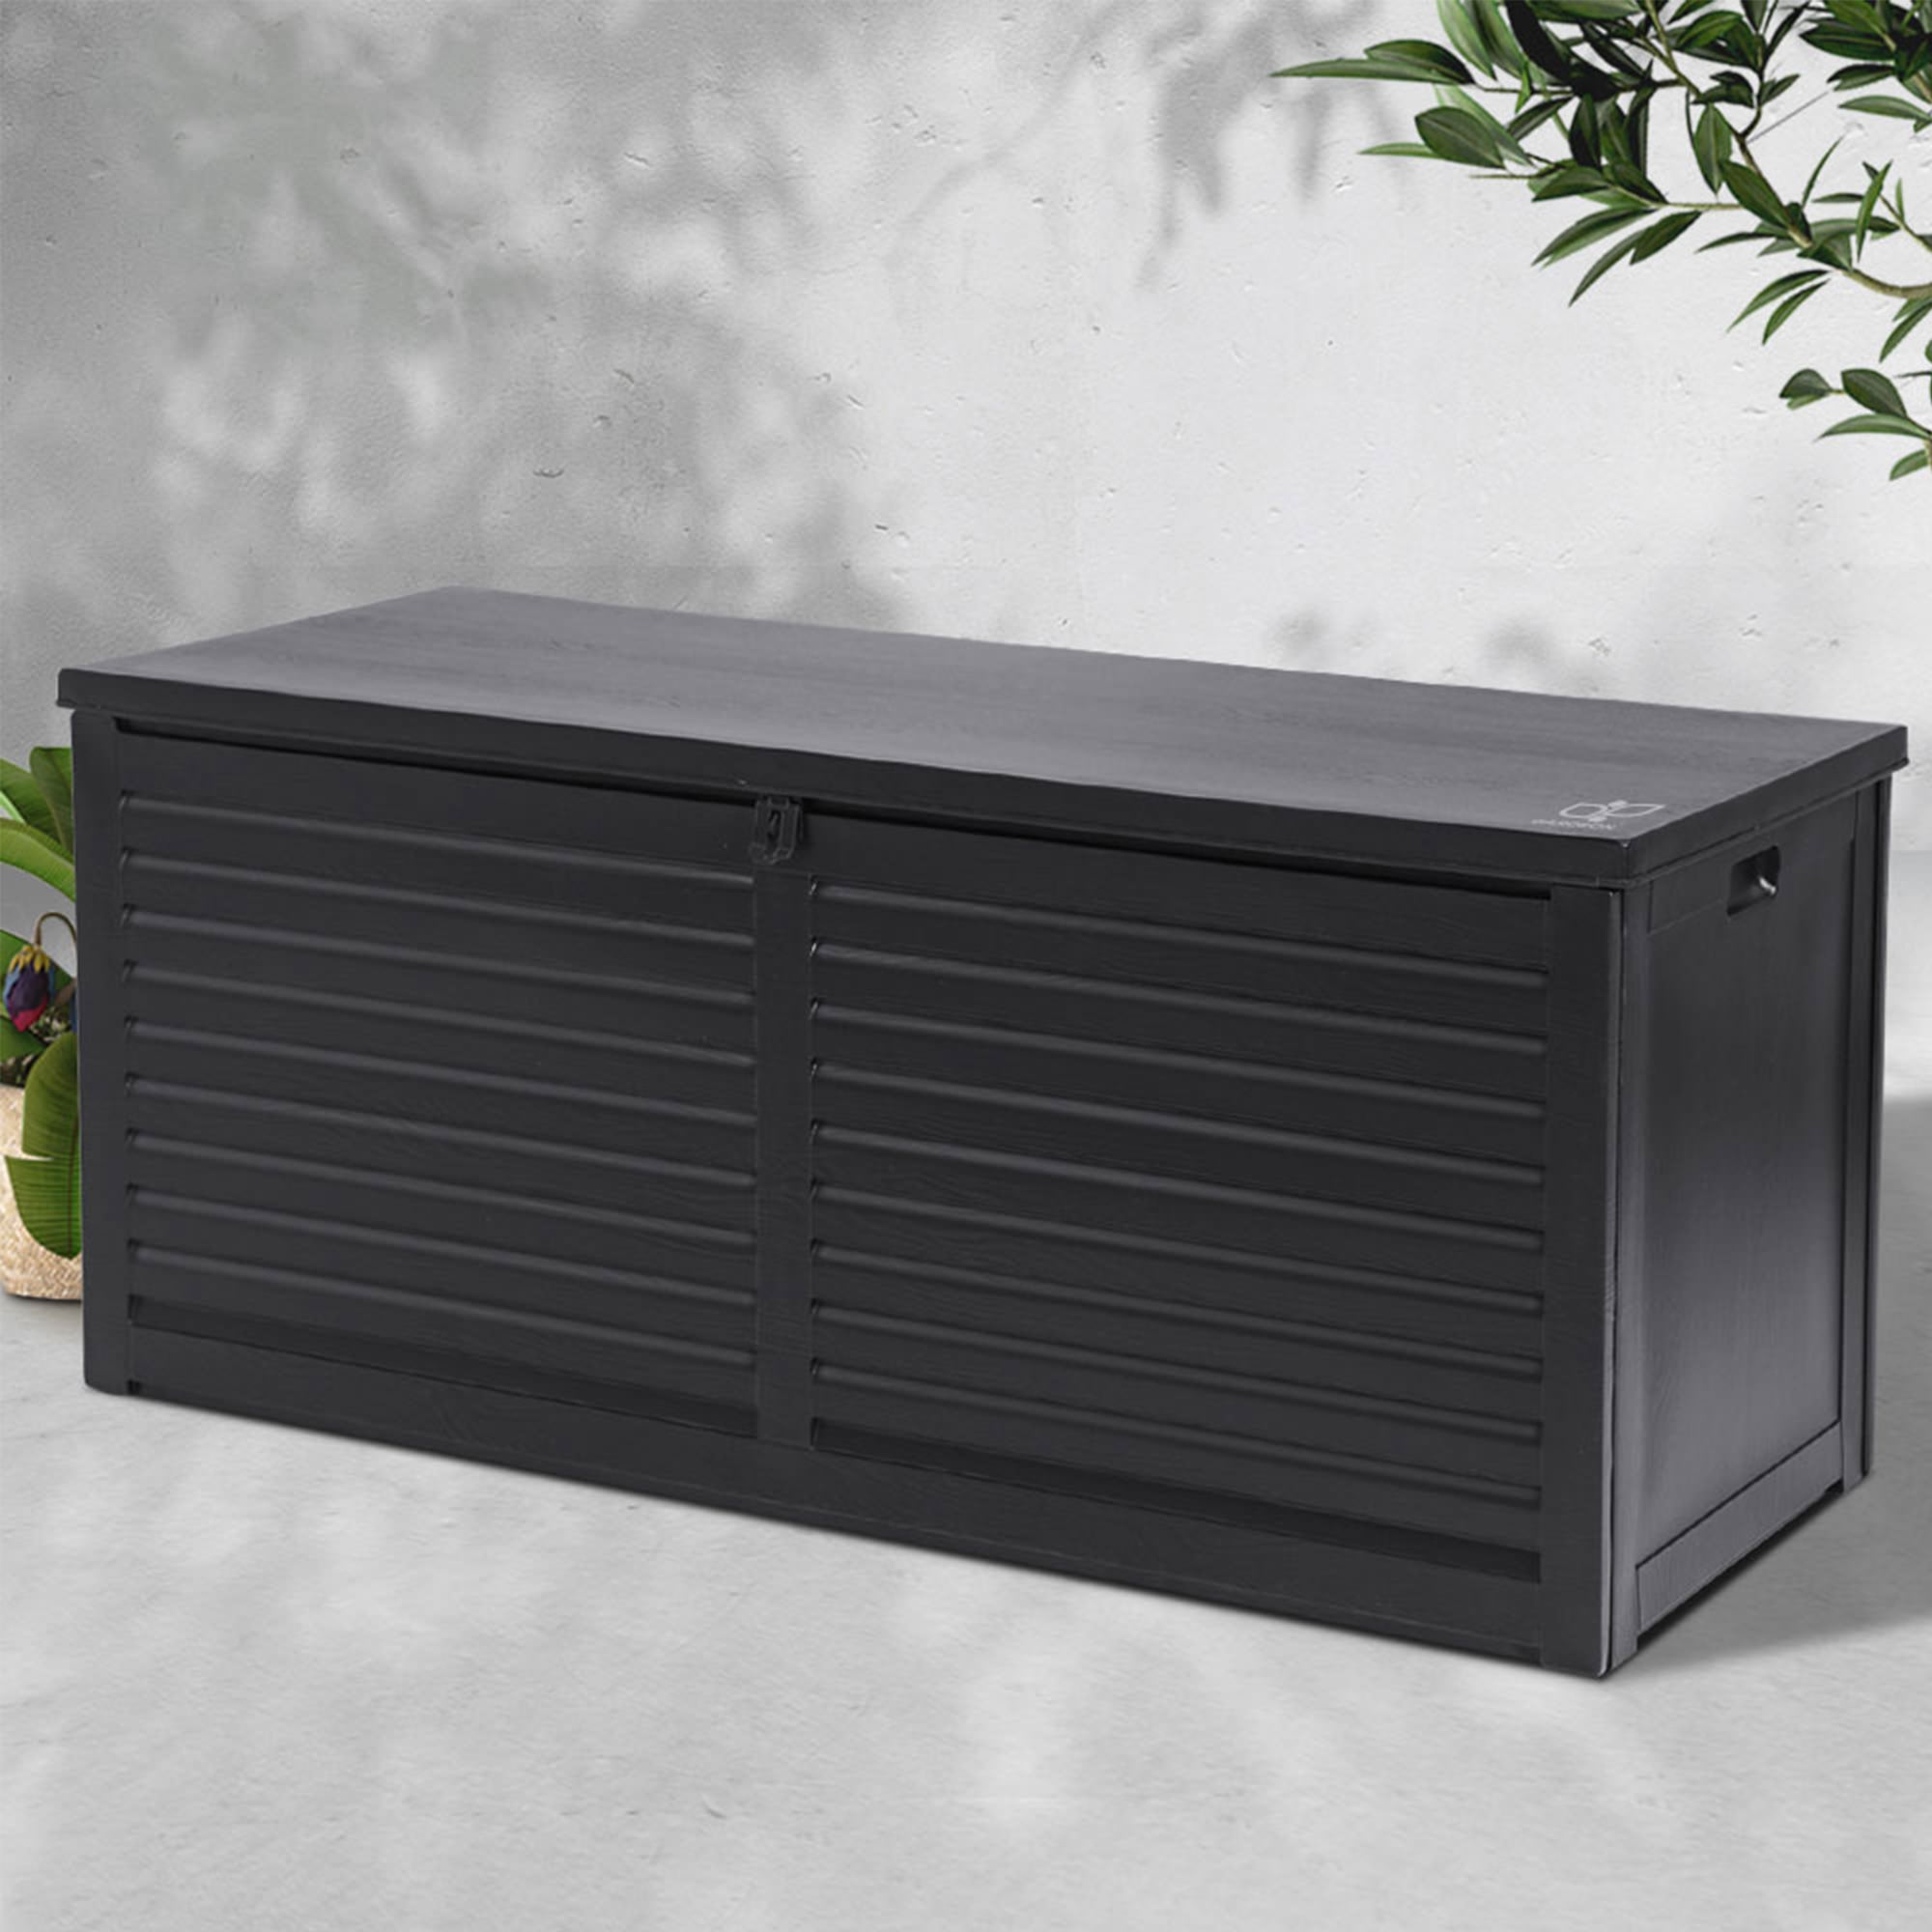 Gardeon Outdoor Storage Box 490L Black Image 2